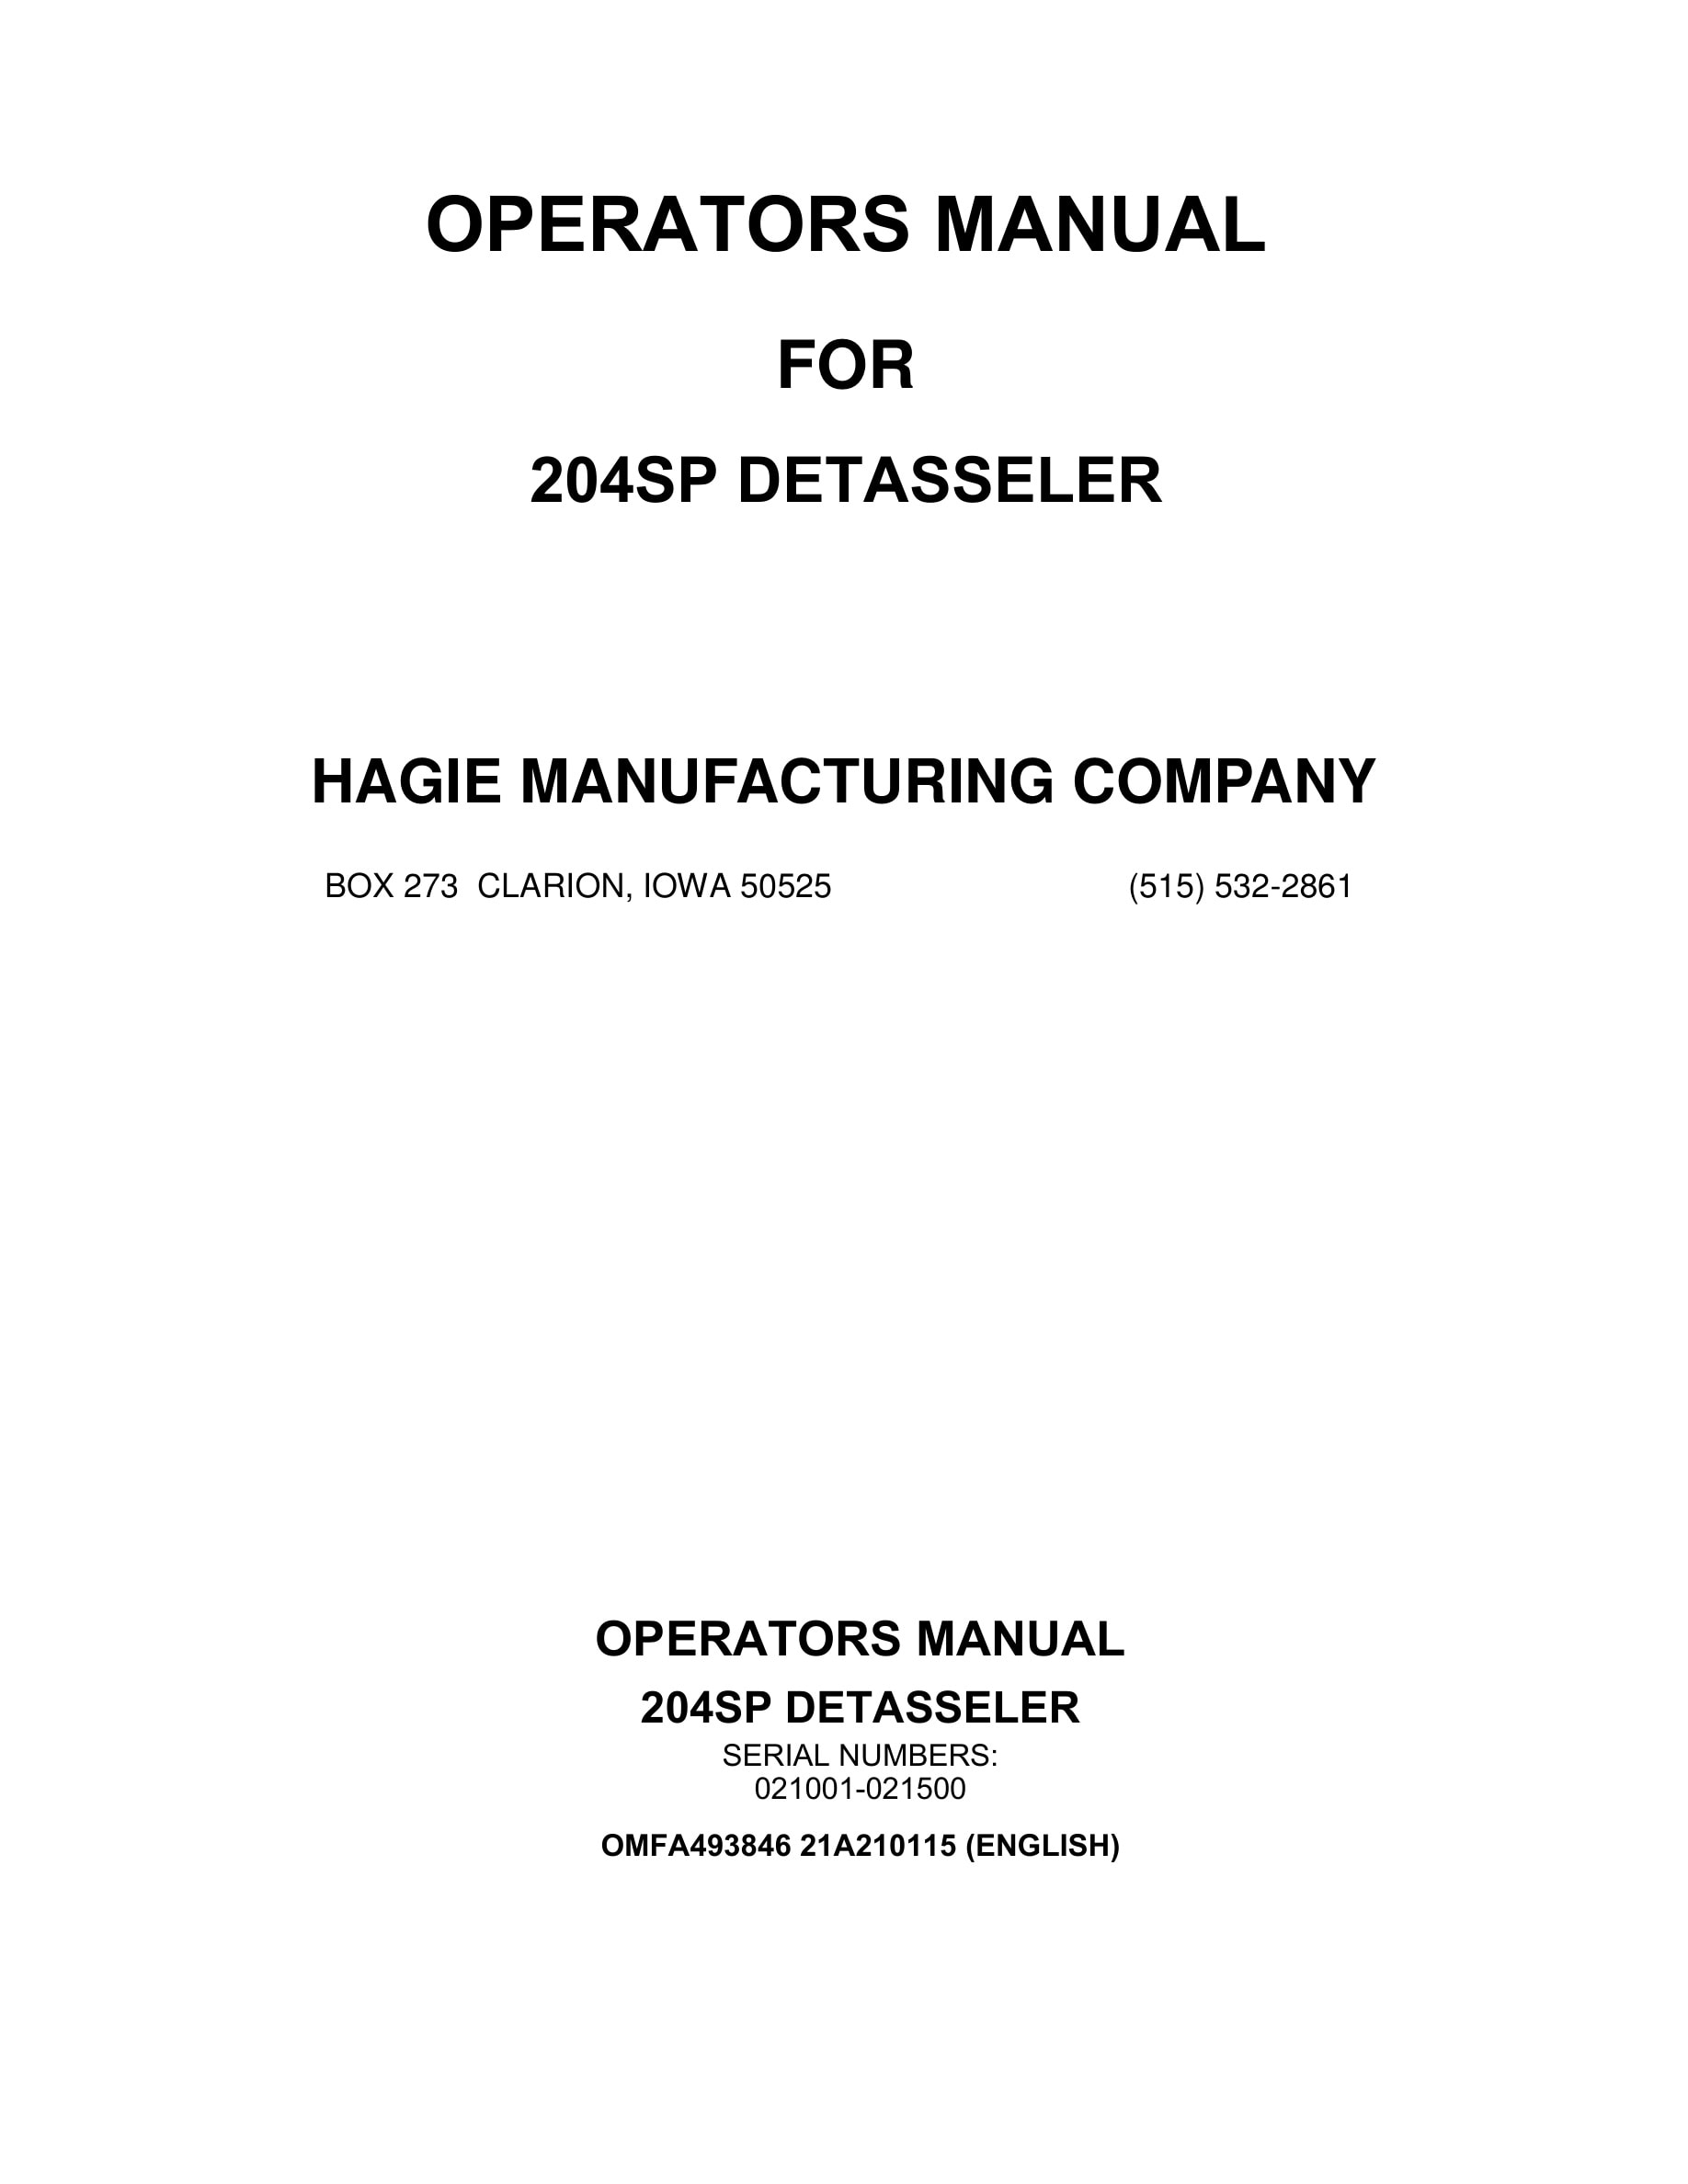 John Deere 204SP DETASSELER Operator Manual OMFA493846-1